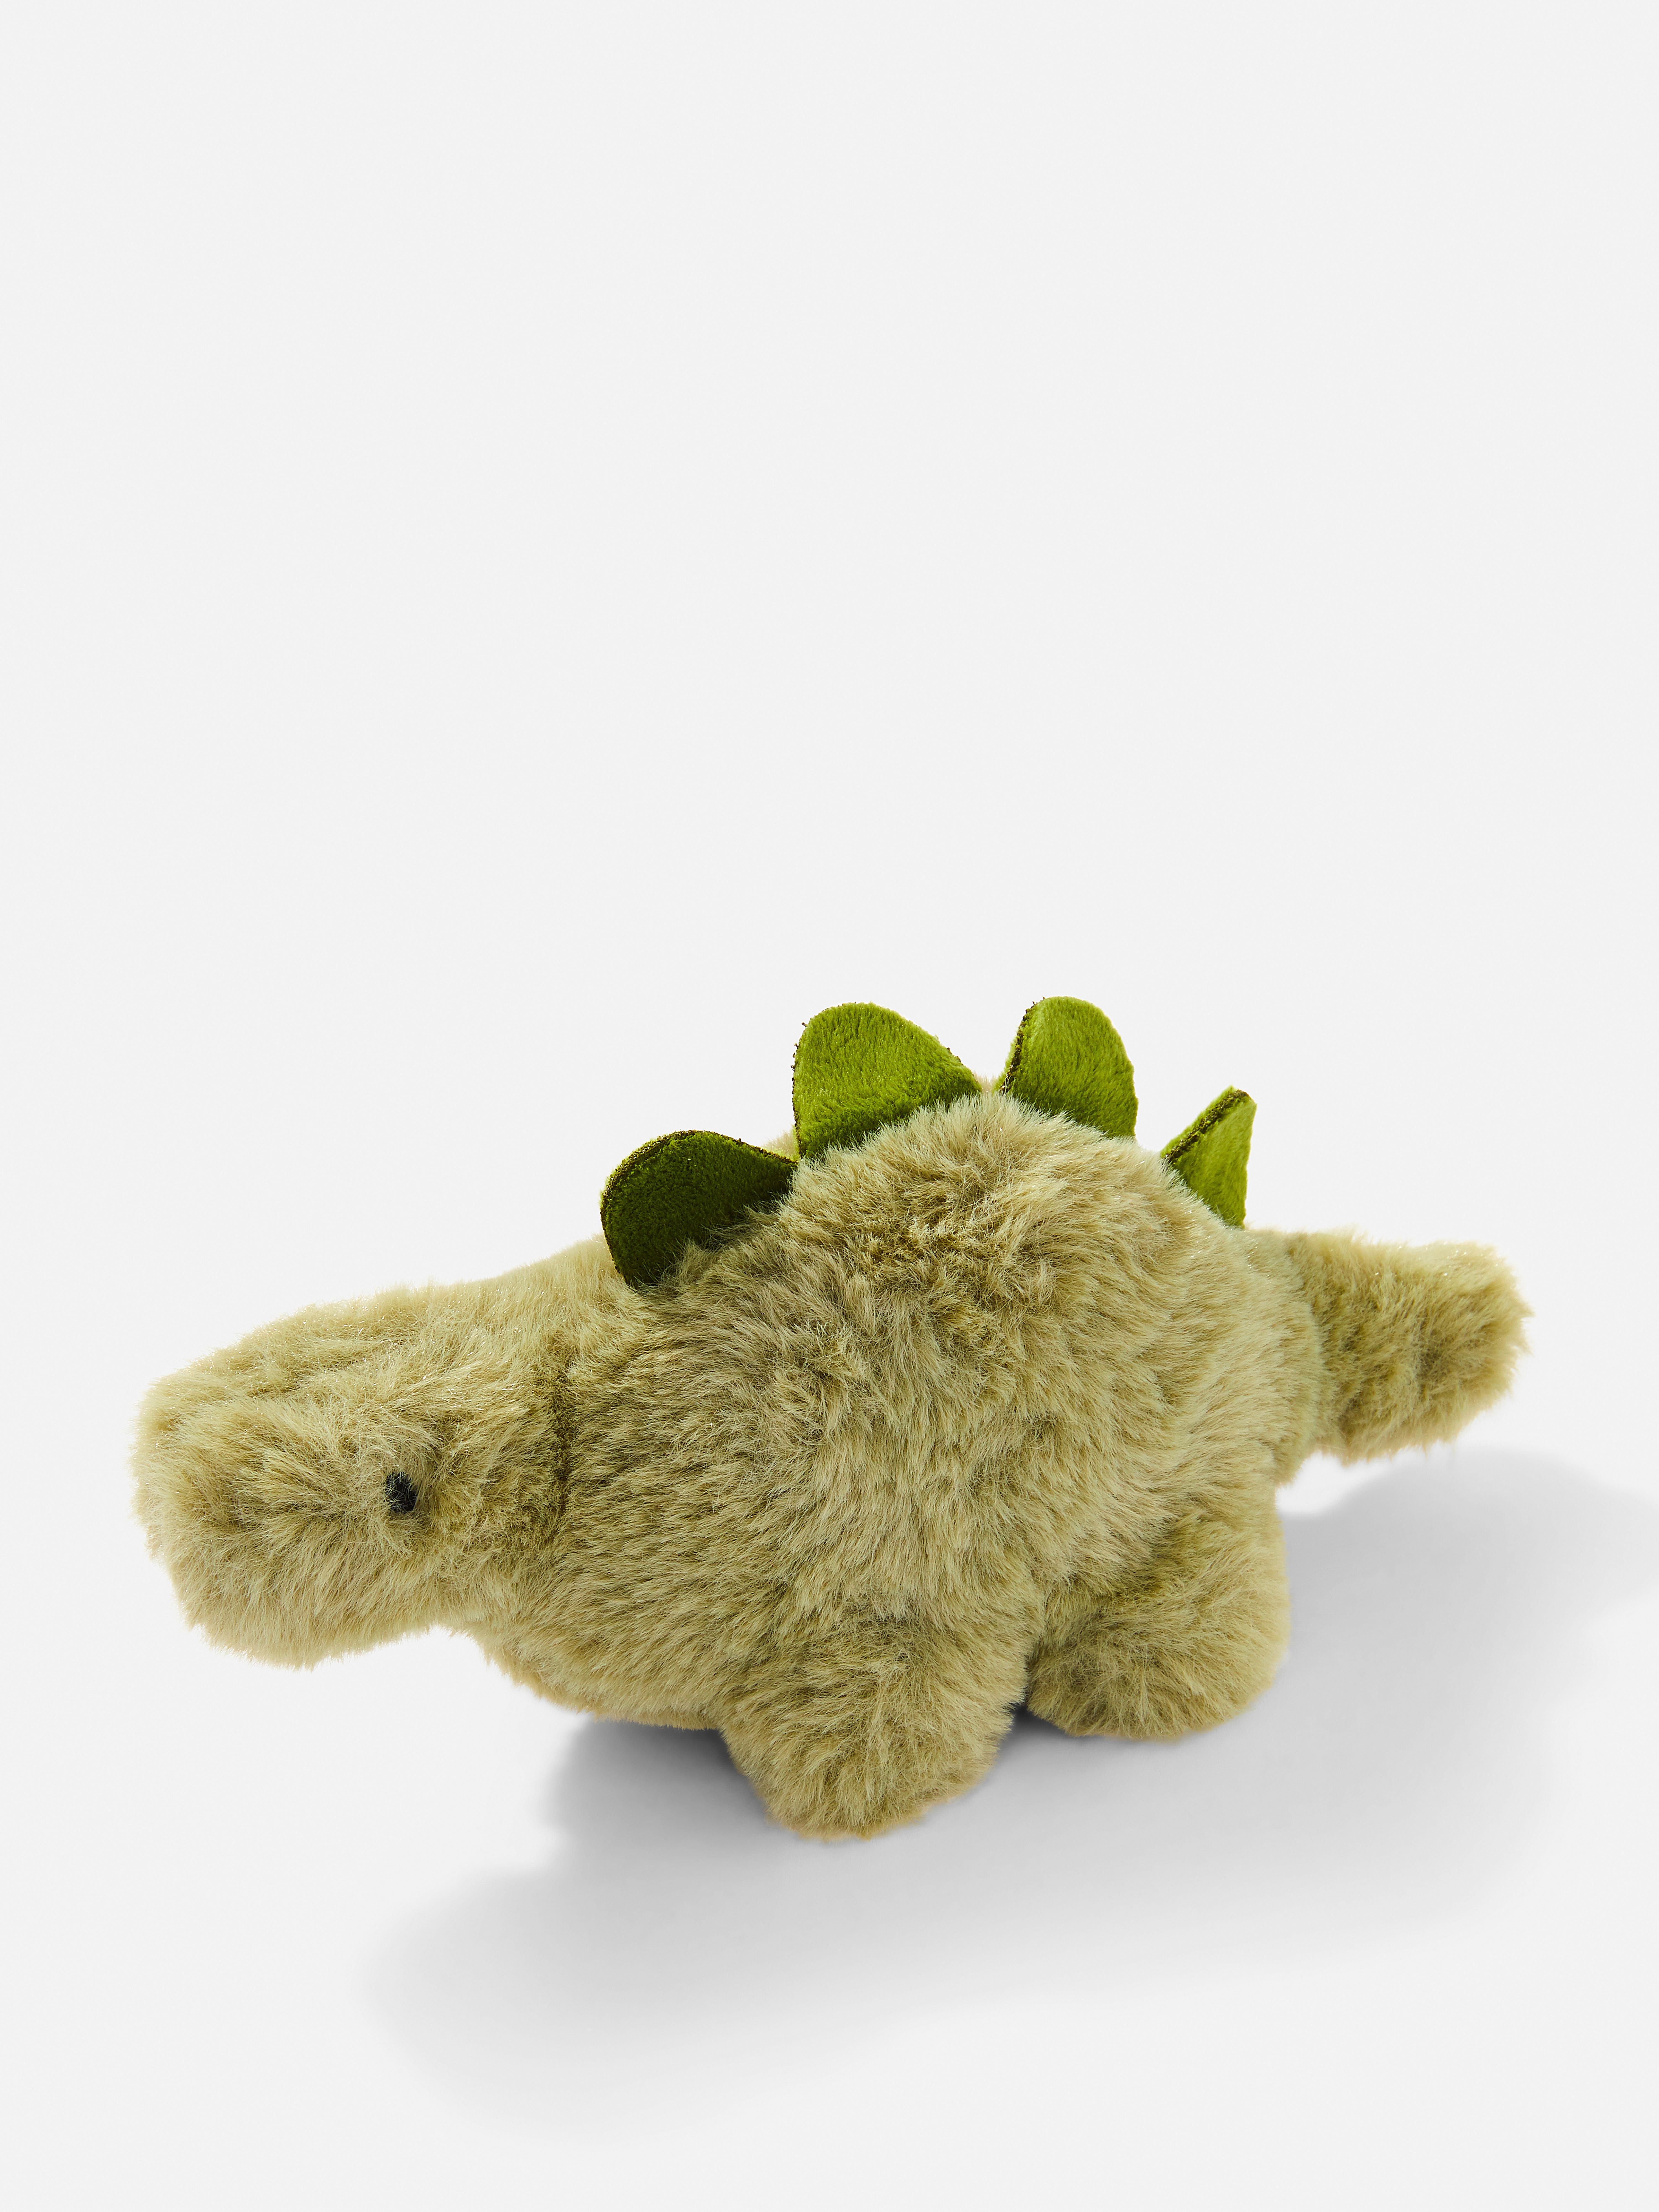 Small Plush Dinosaur Toy